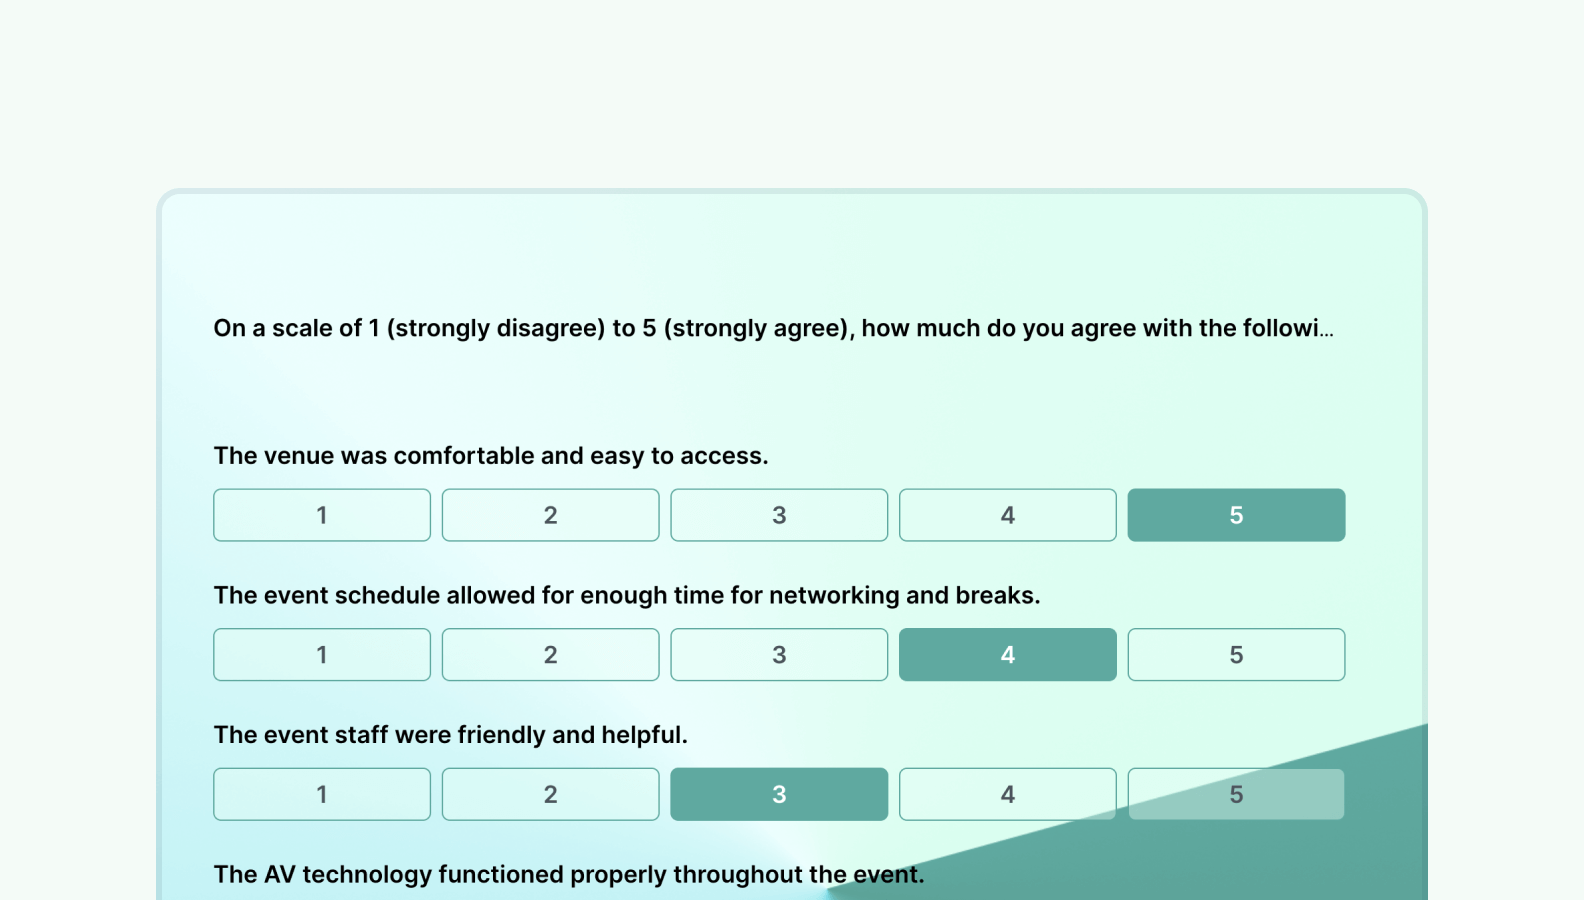 Event feedback survey